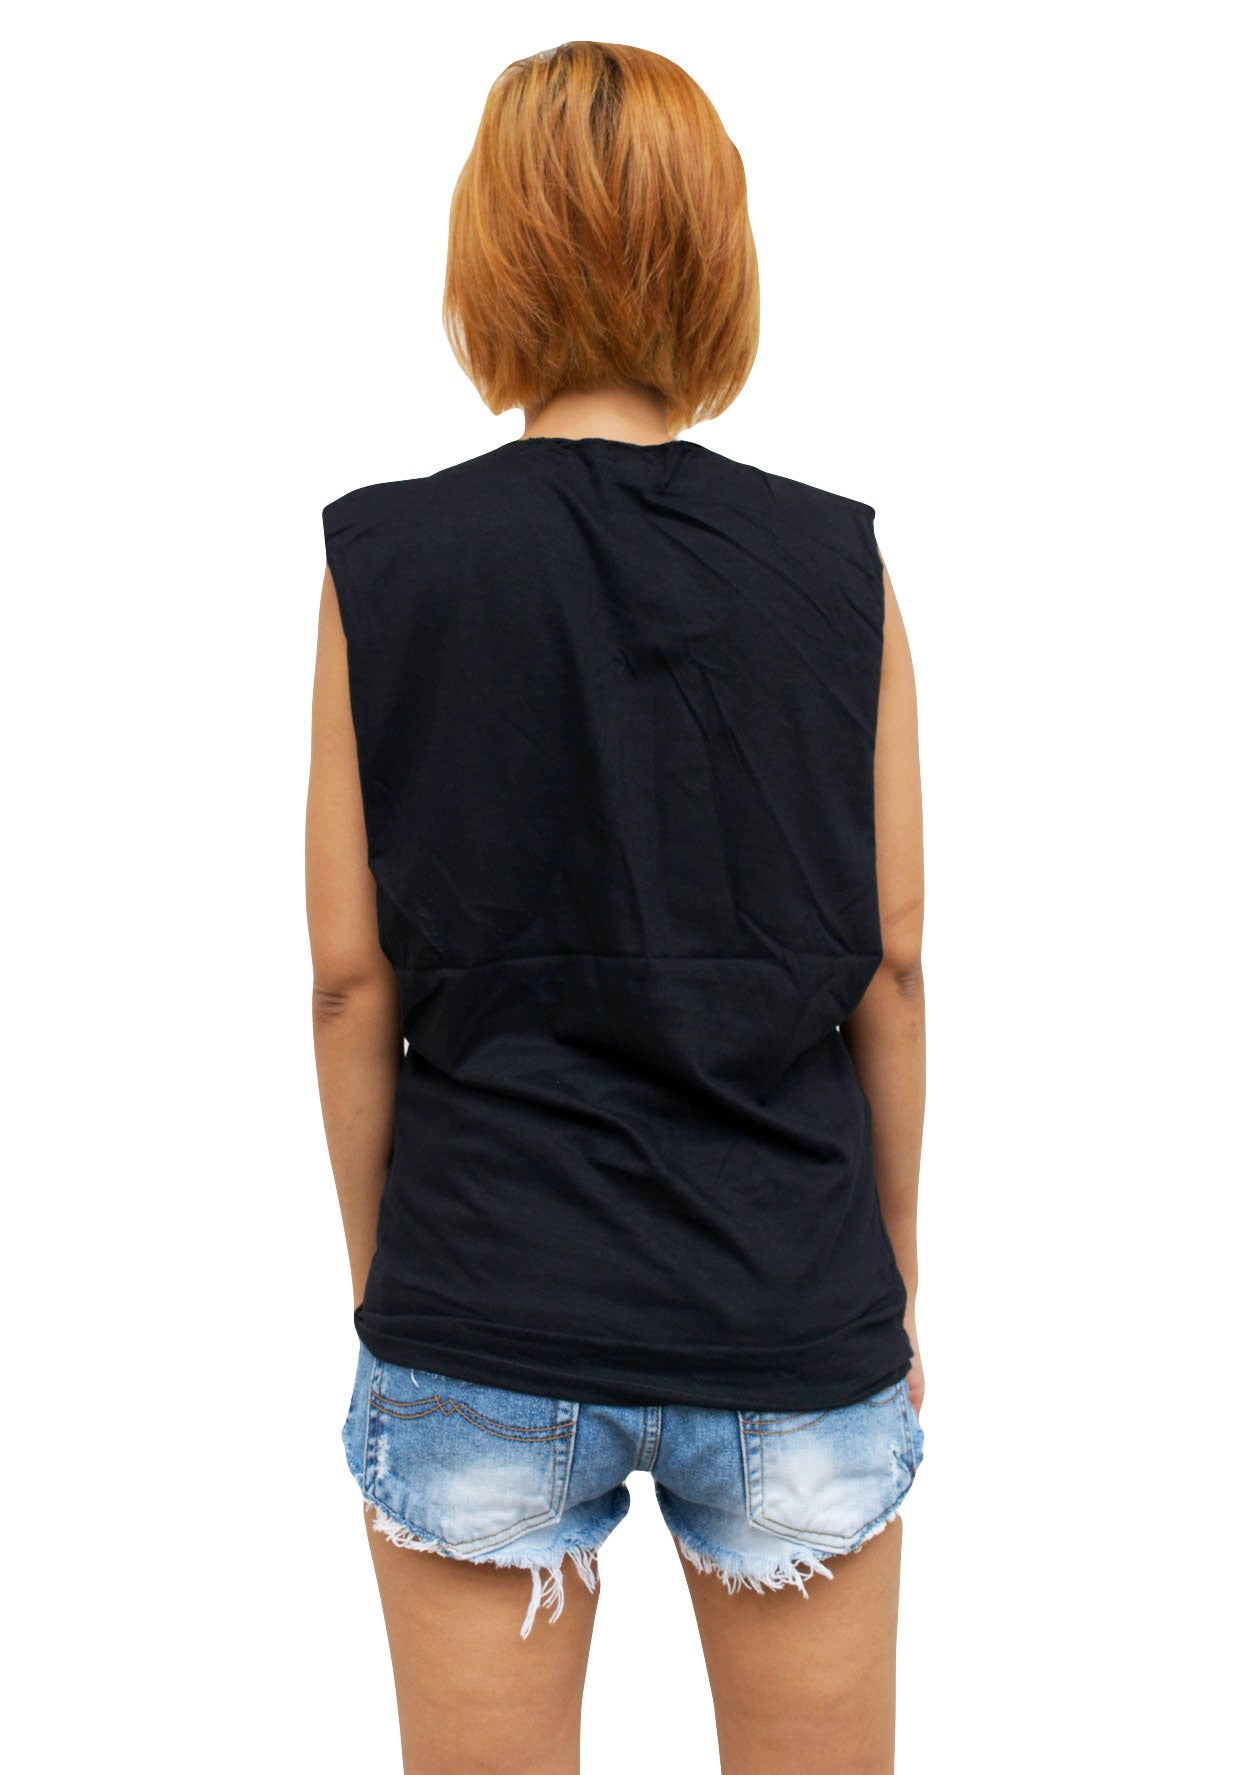 Ladies Aerosmith Vest Tank-Top Singlet Sleeveless T-Shirt